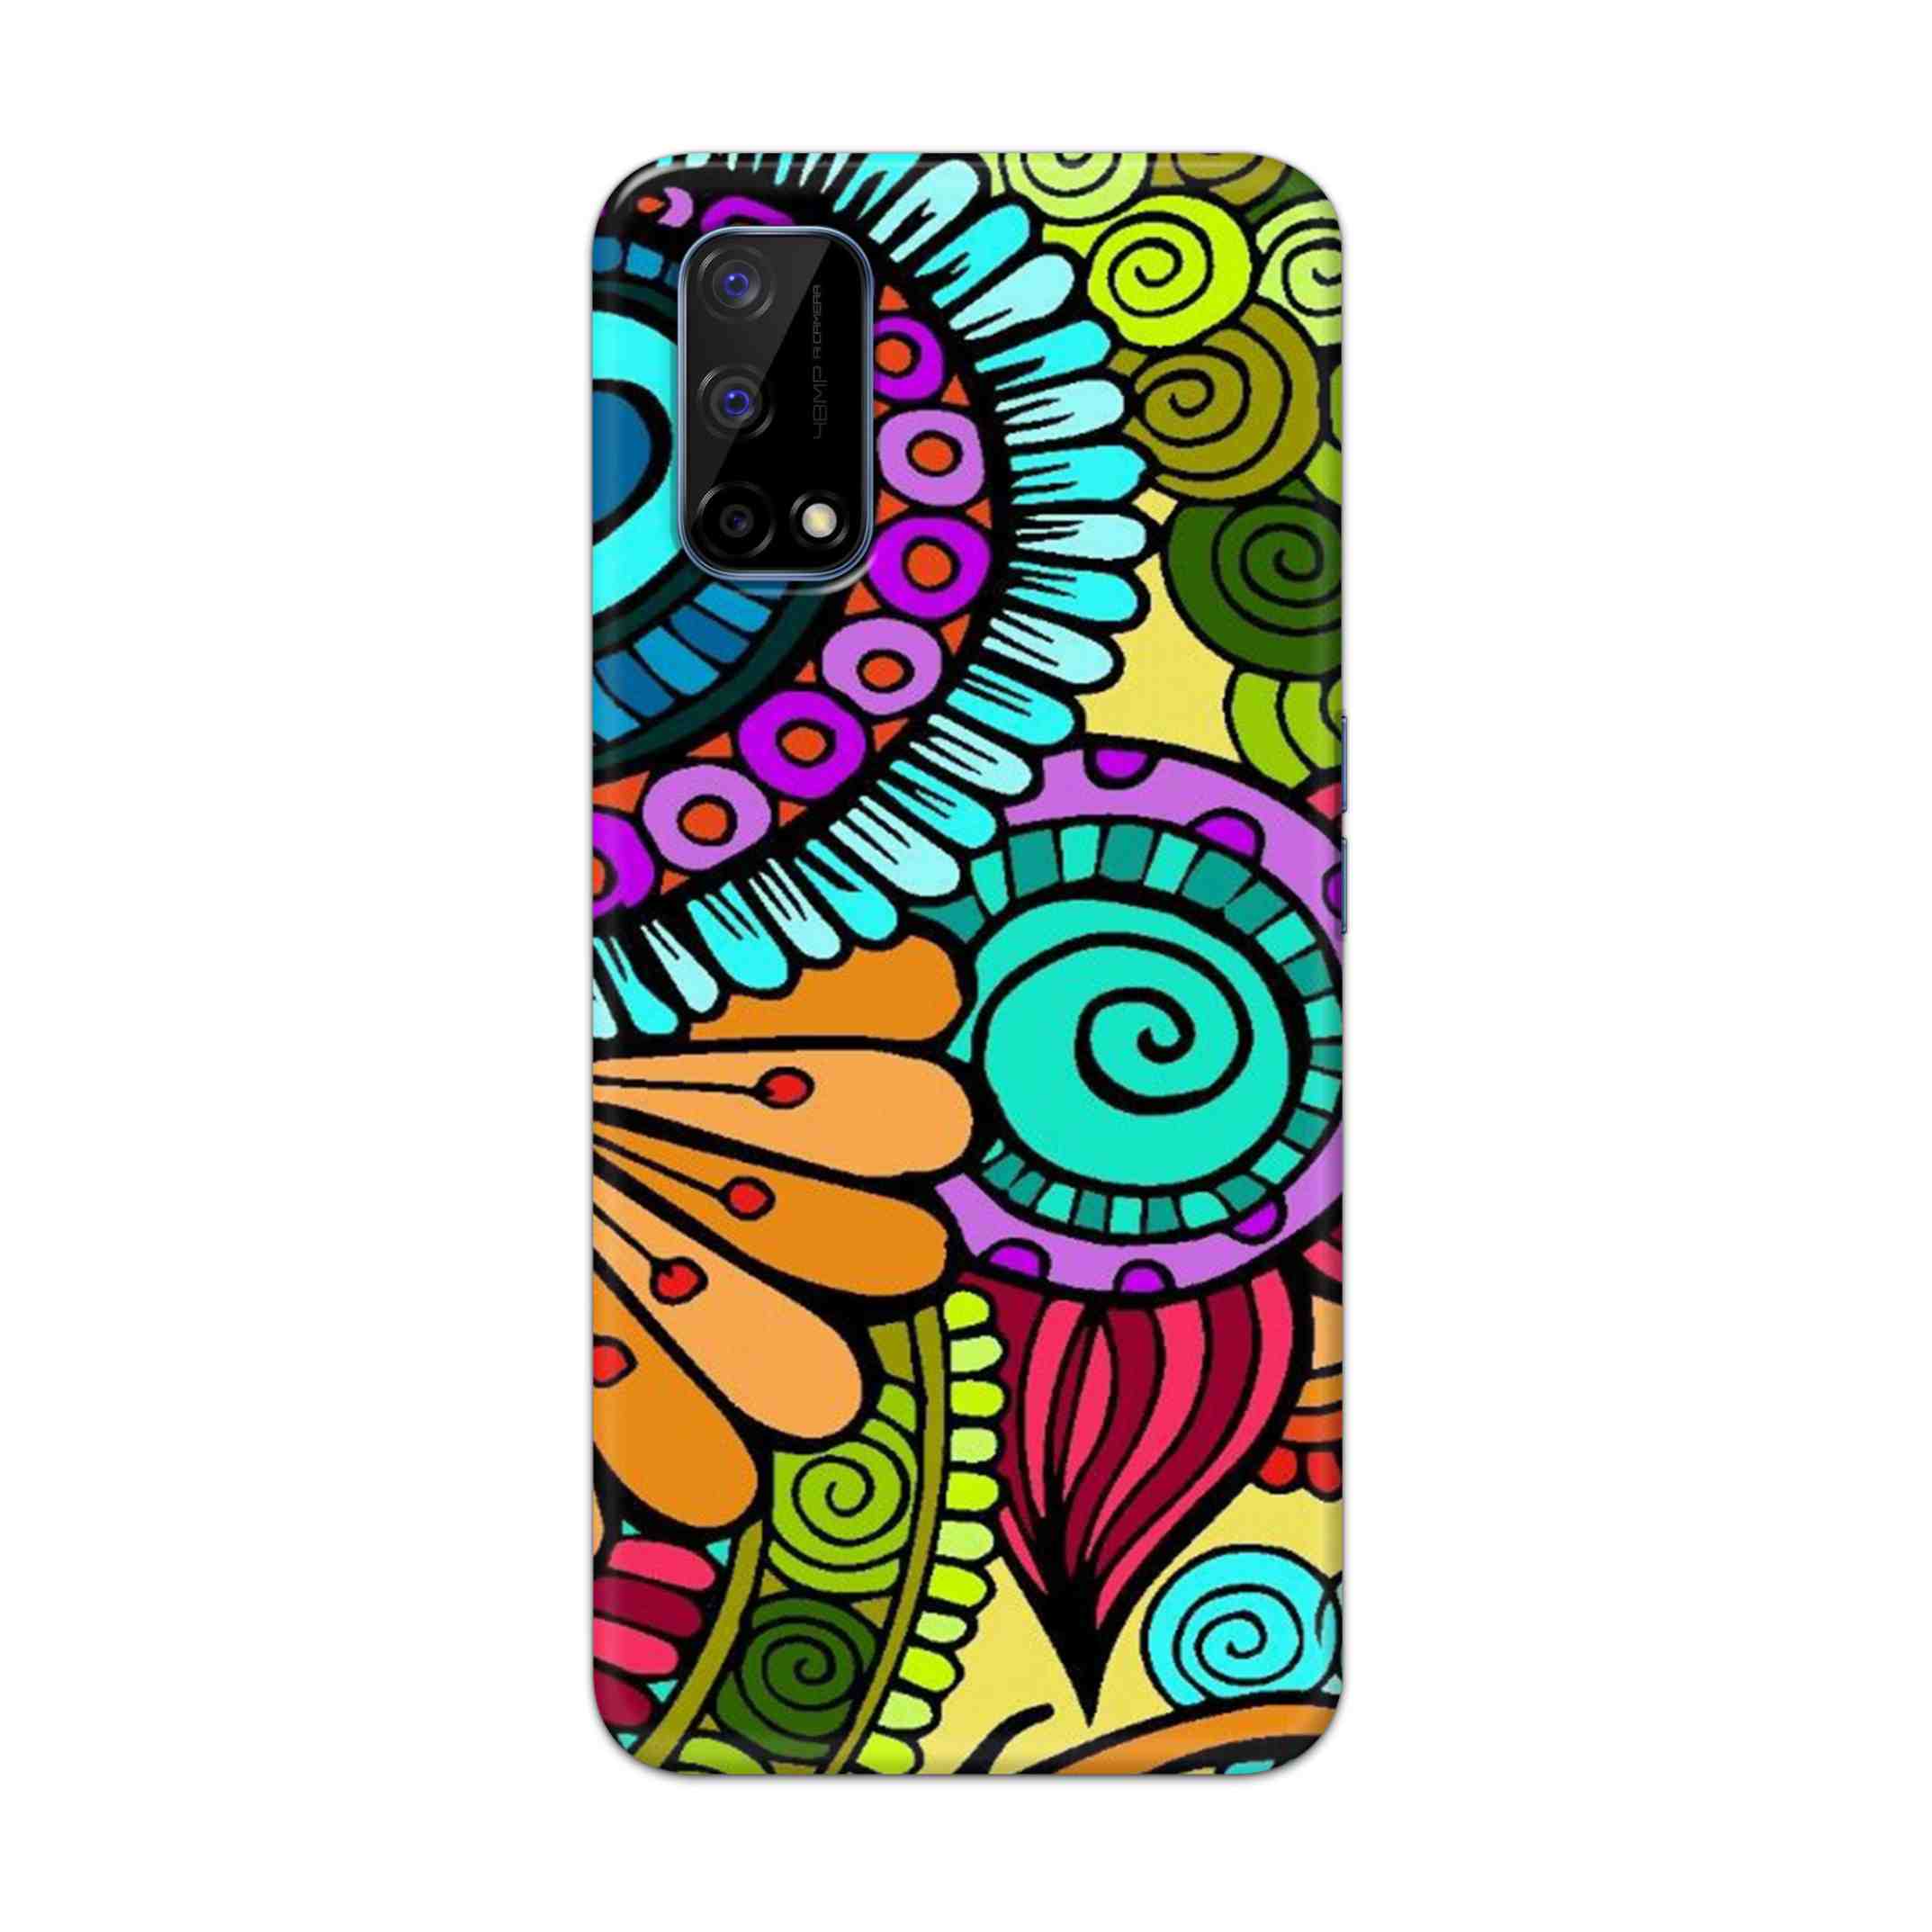 Buy The Kalachakra Mandala Hard Back Mobile Phone Case Cover For Realme Narzo 30 Pro Online